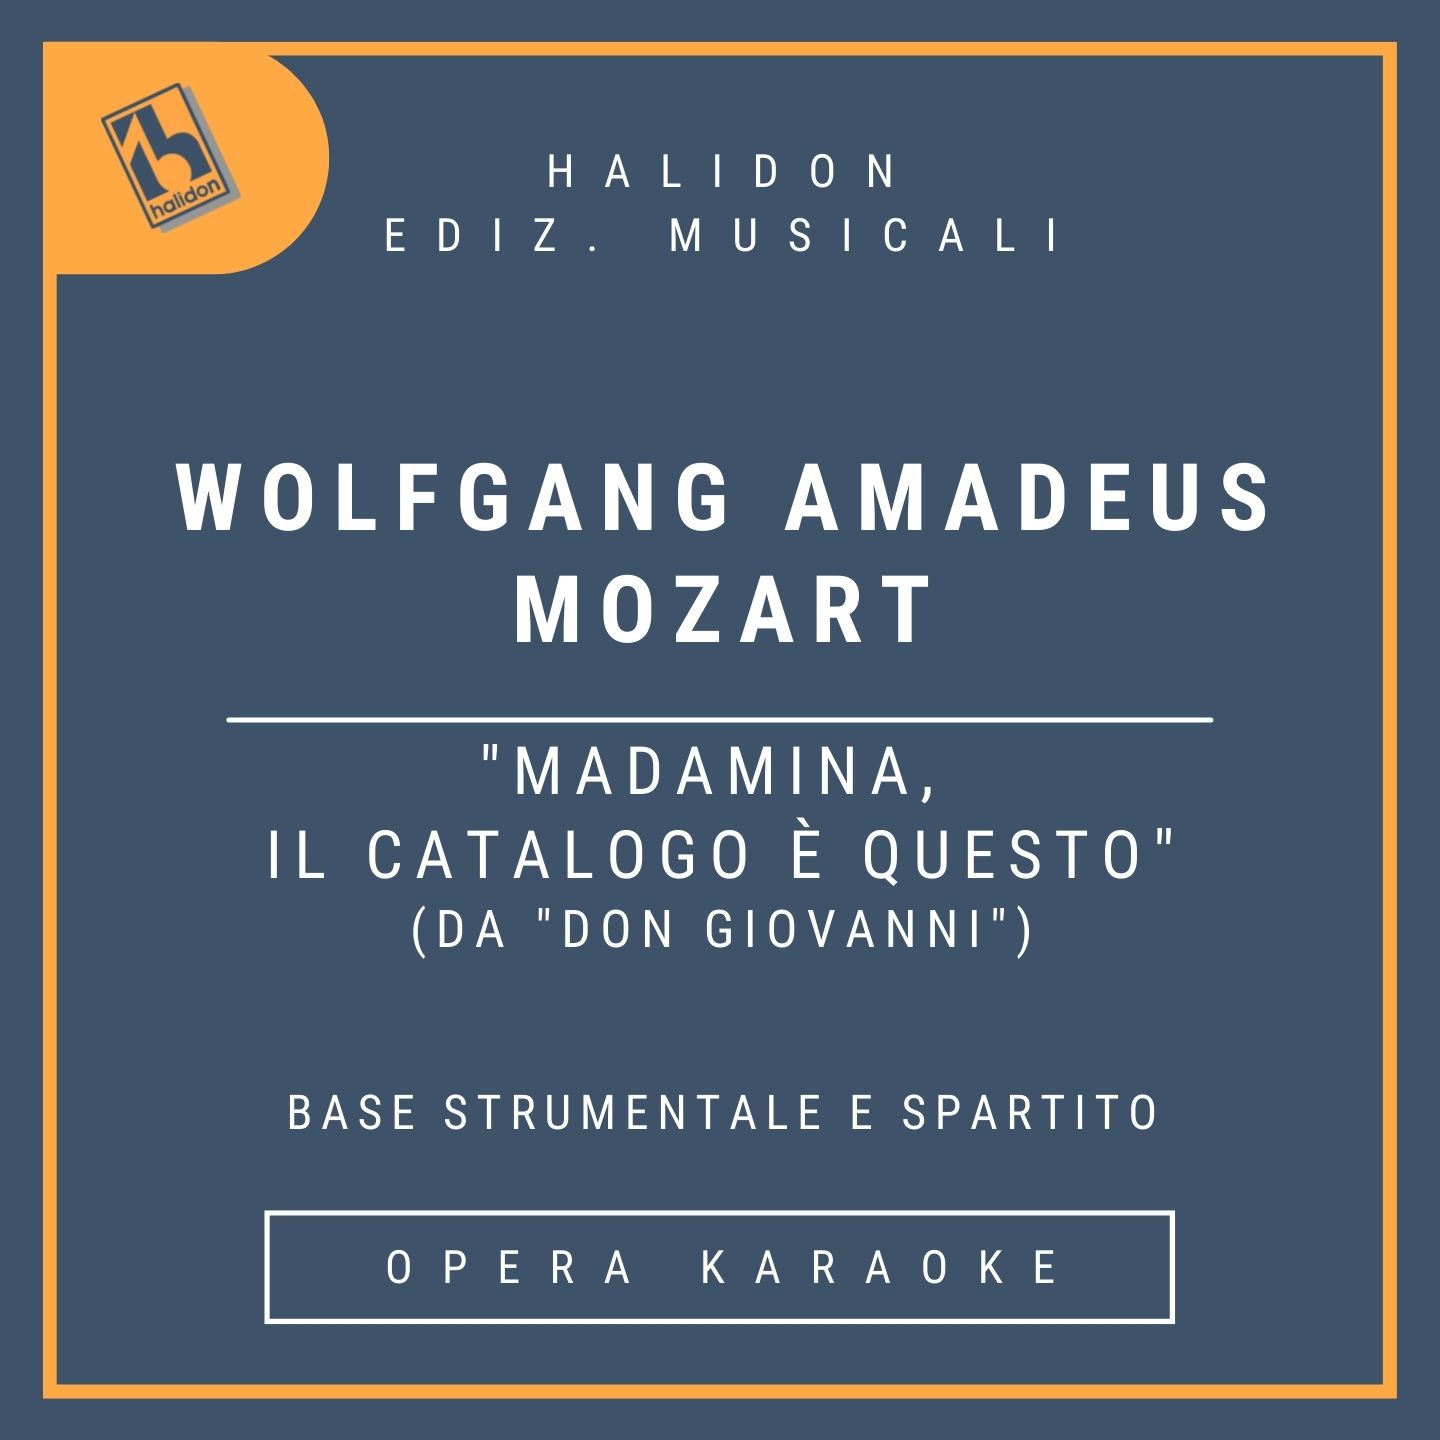 Wolfgang Amadeus Mozart - Madamina, il catalogo è questo (from 'Don Giovanni') - Leporello's Aria (baritono) - Instrumental track + sheet